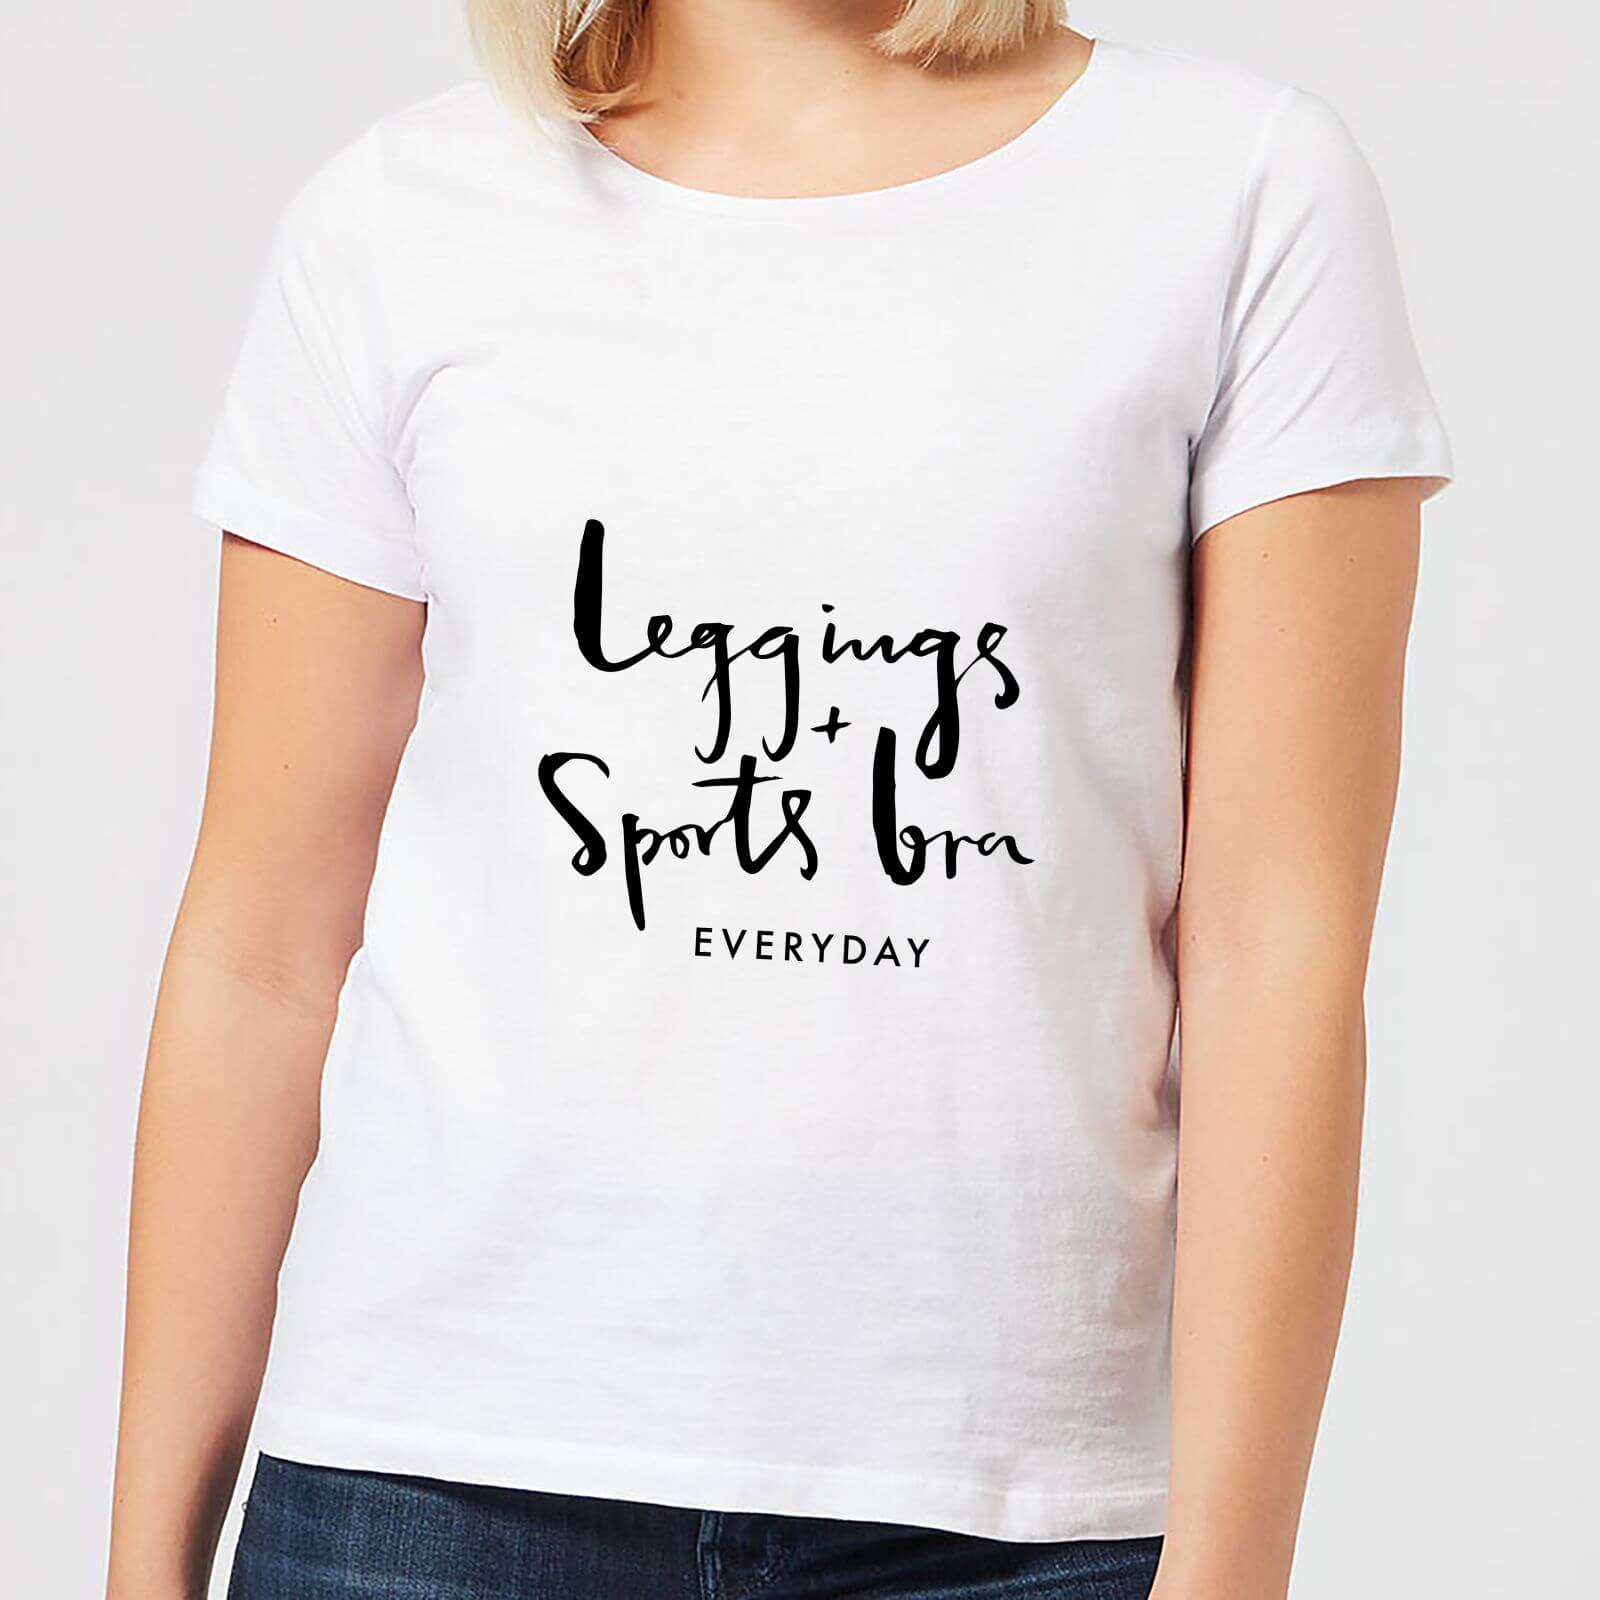 Leggings and Sports Bra Every Day Women's T-Shirt - White - S - White